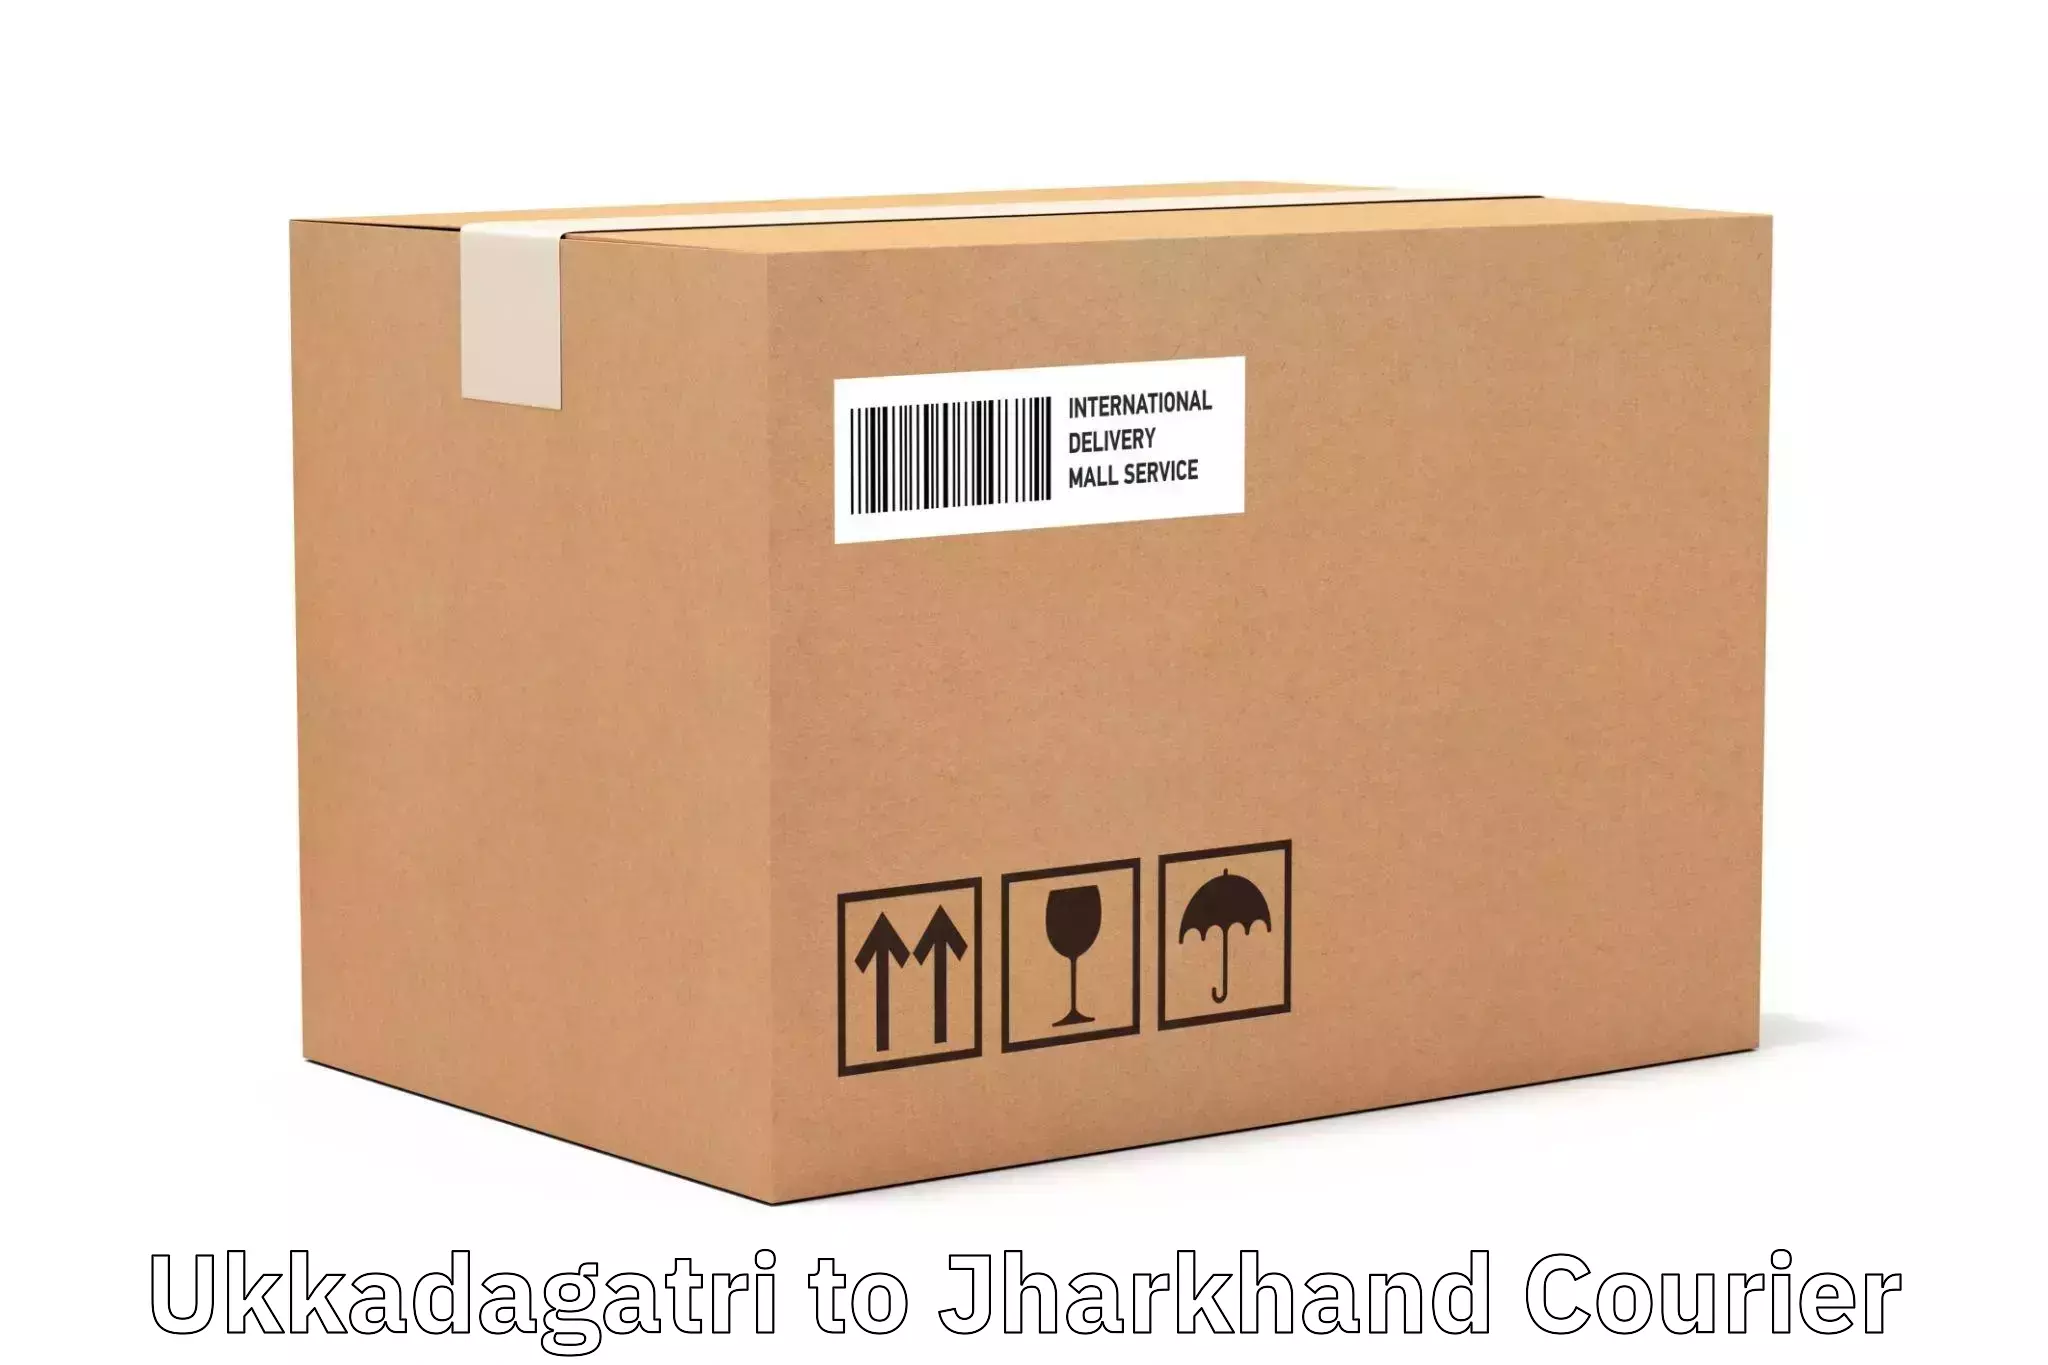 Nationwide delivery network Ukkadagatri to Jharkhand